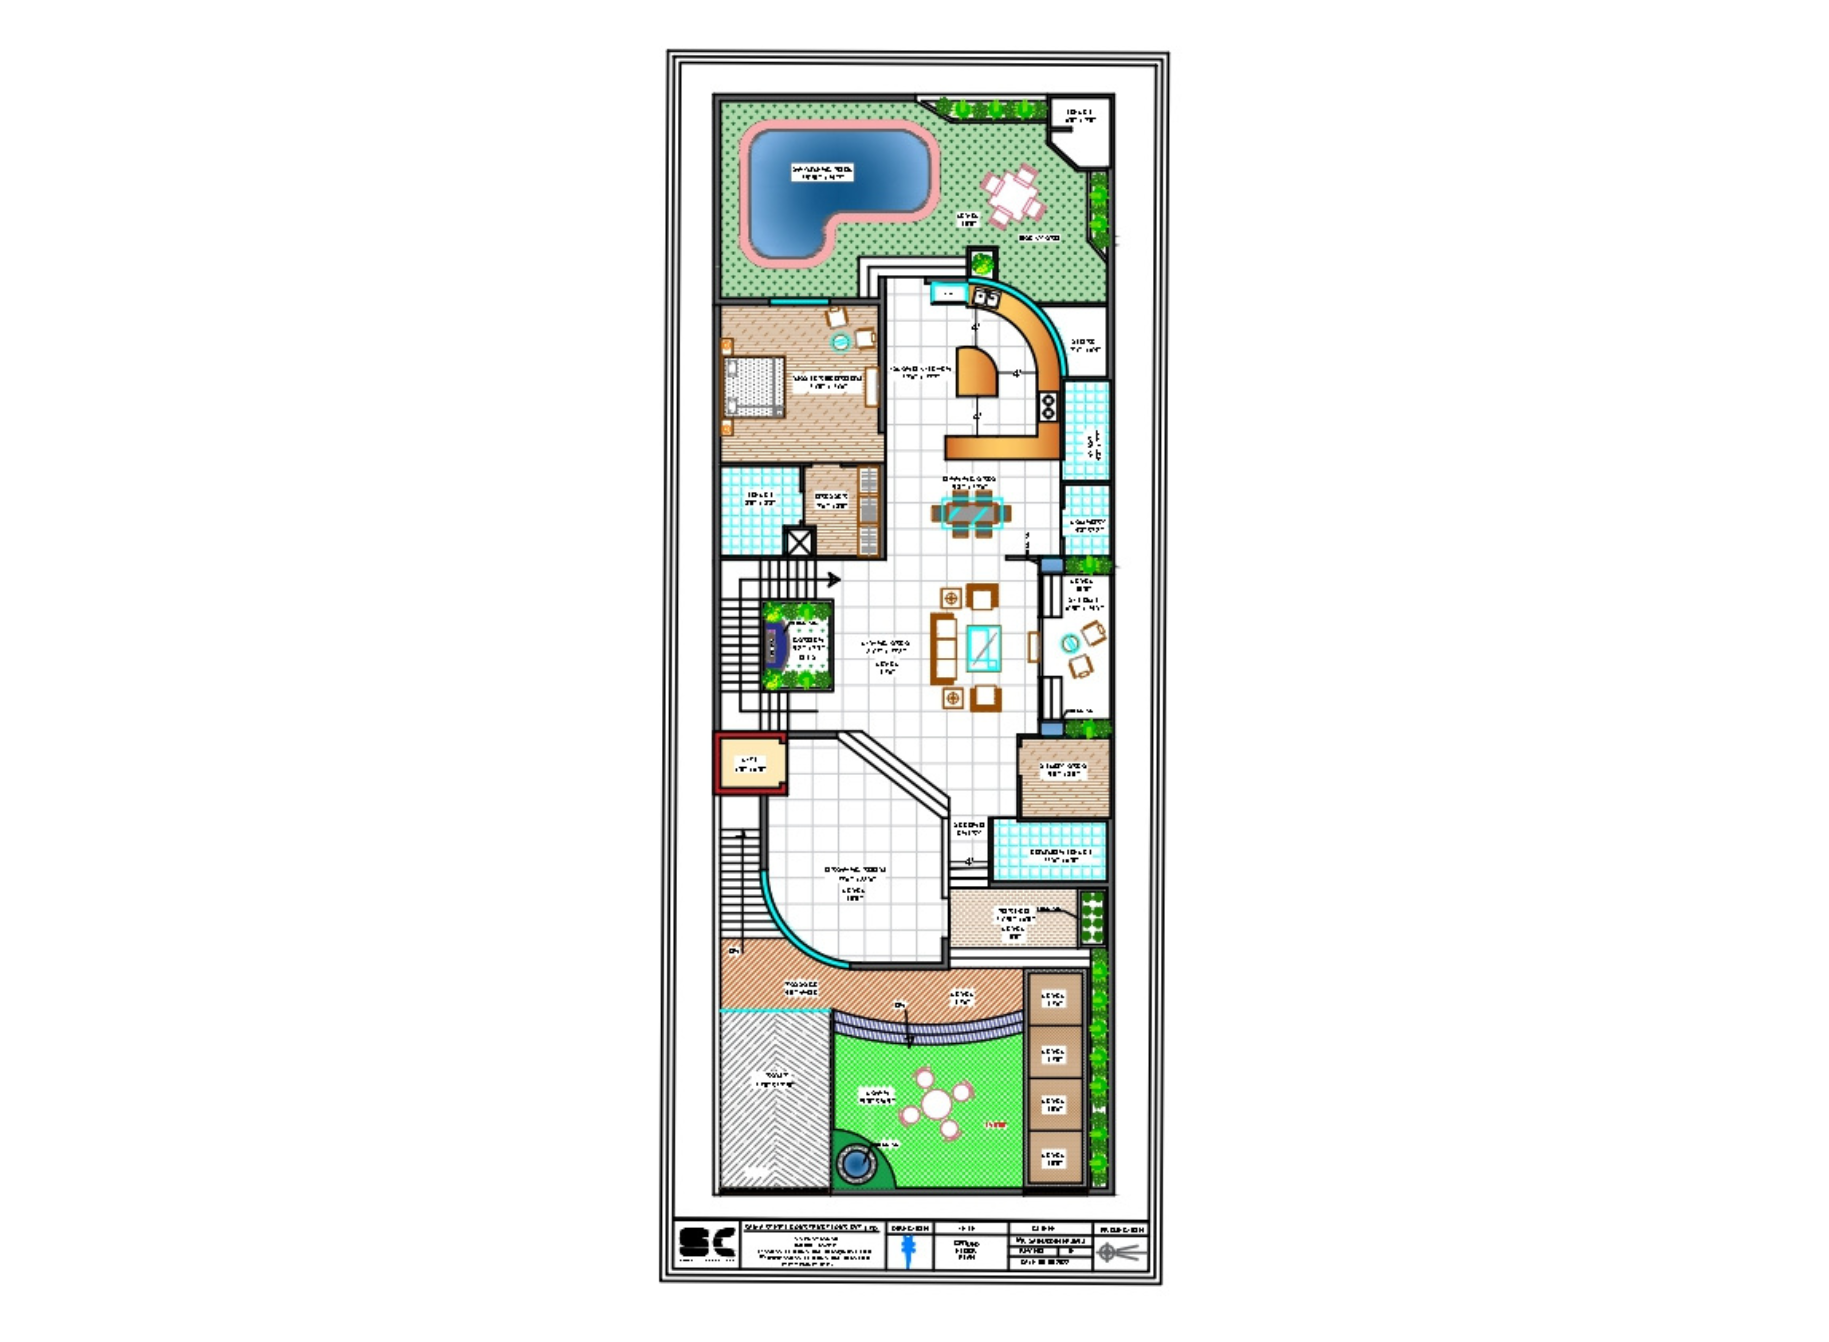 Explore Floor Plan of 40x110 sq.ft. House